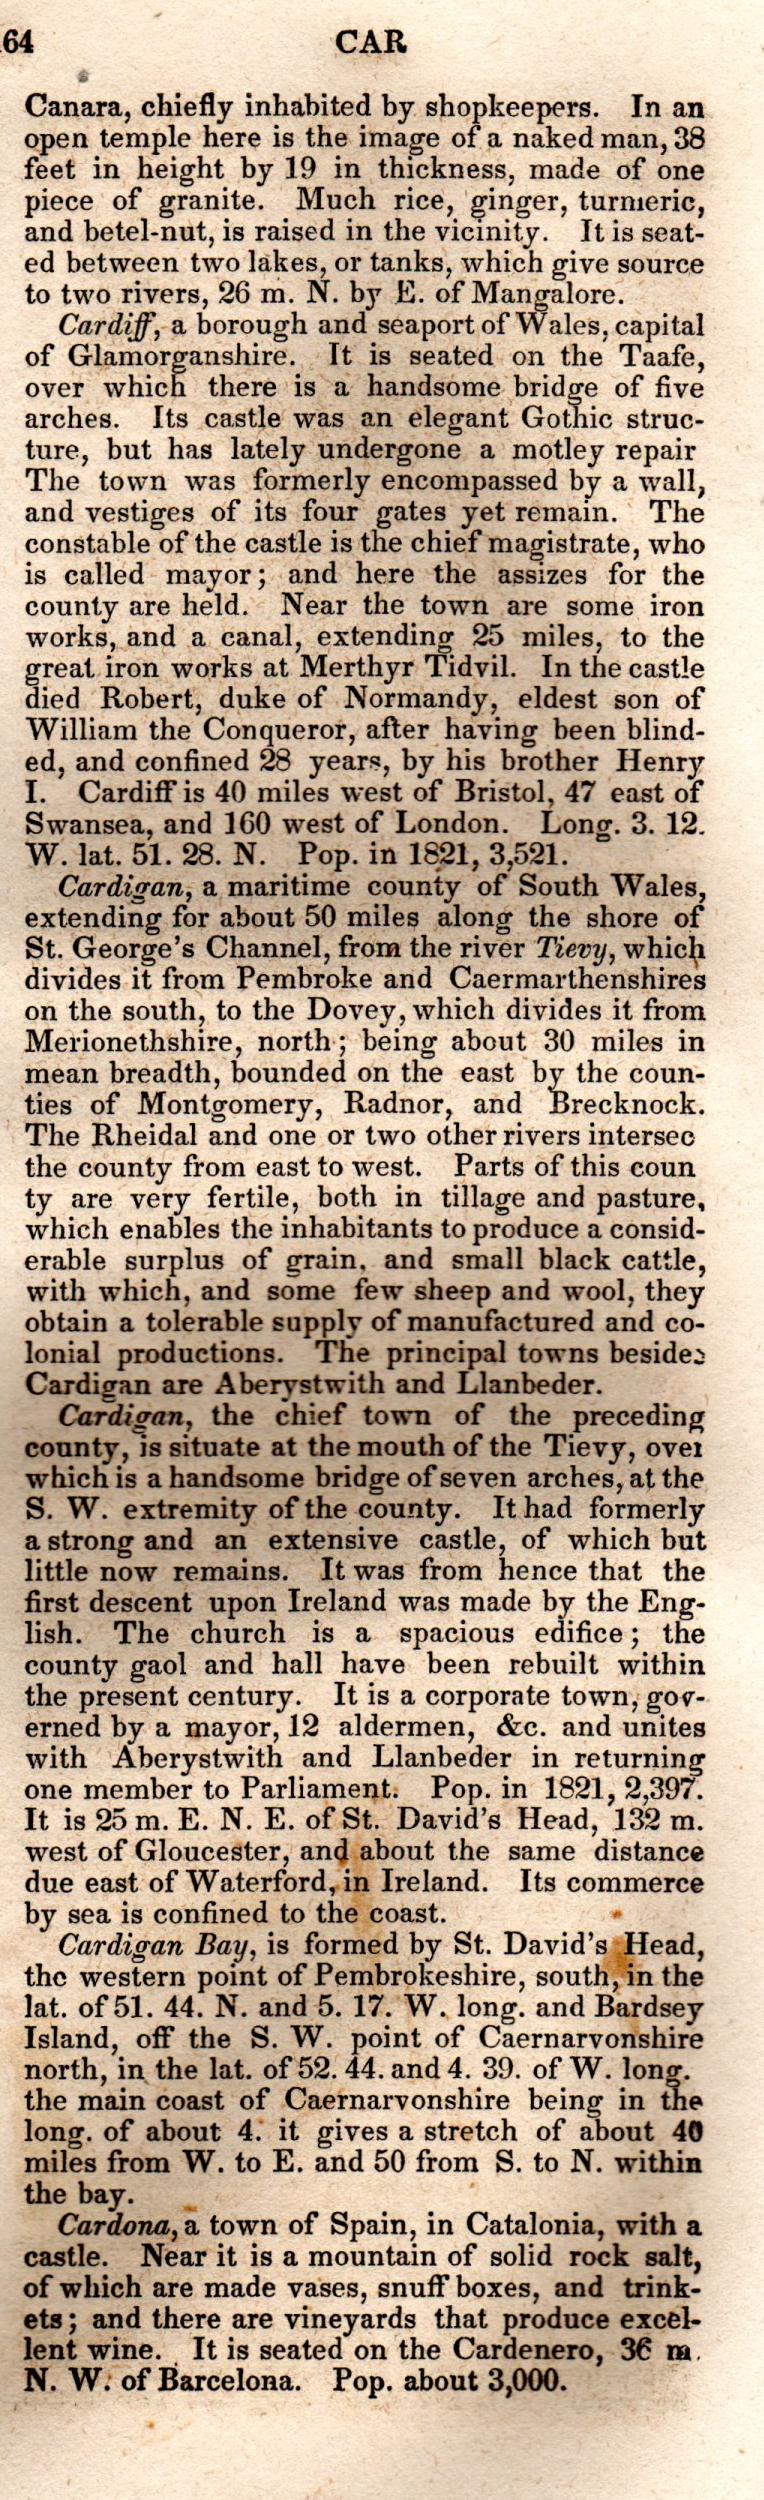 Brookes’ Universal Gazetteer (1850), Page 164 Right Column